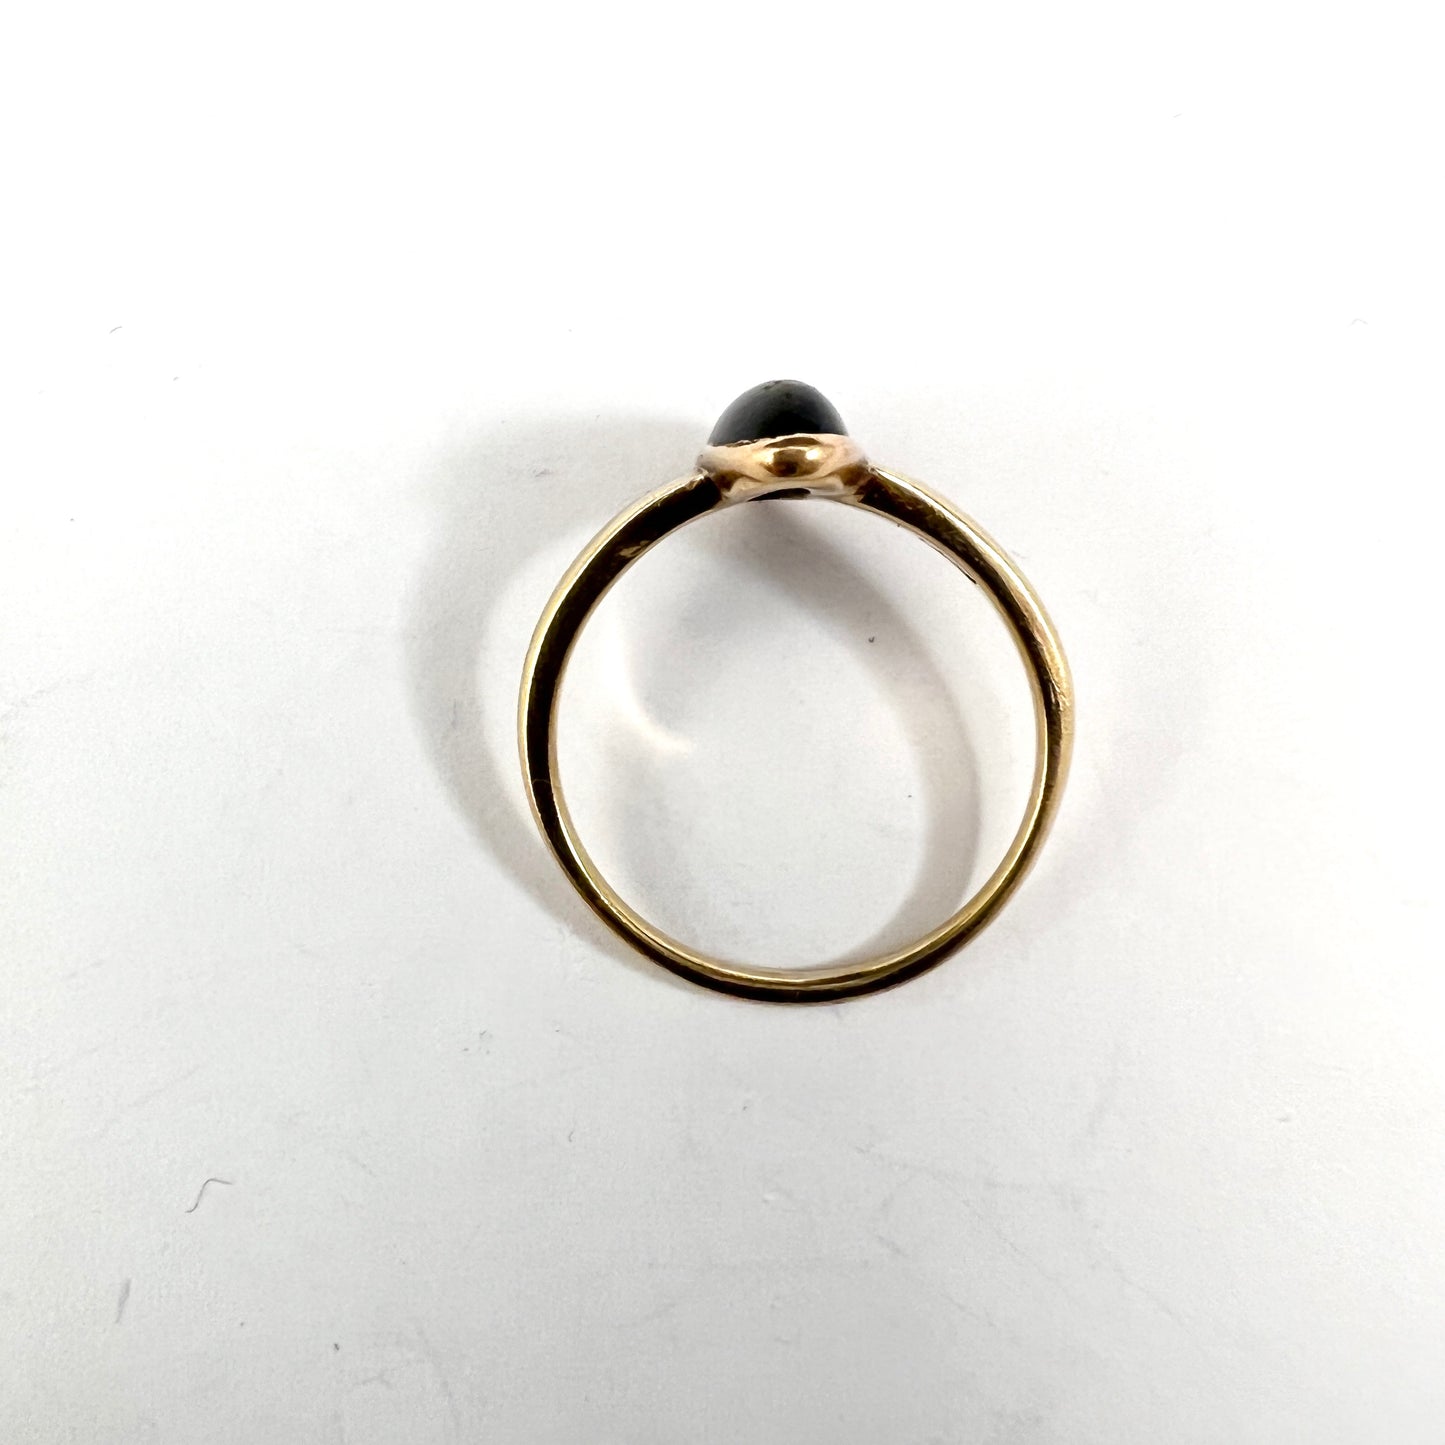 Antique 14k Gold Bloodstone Ring. Probably Denmark.